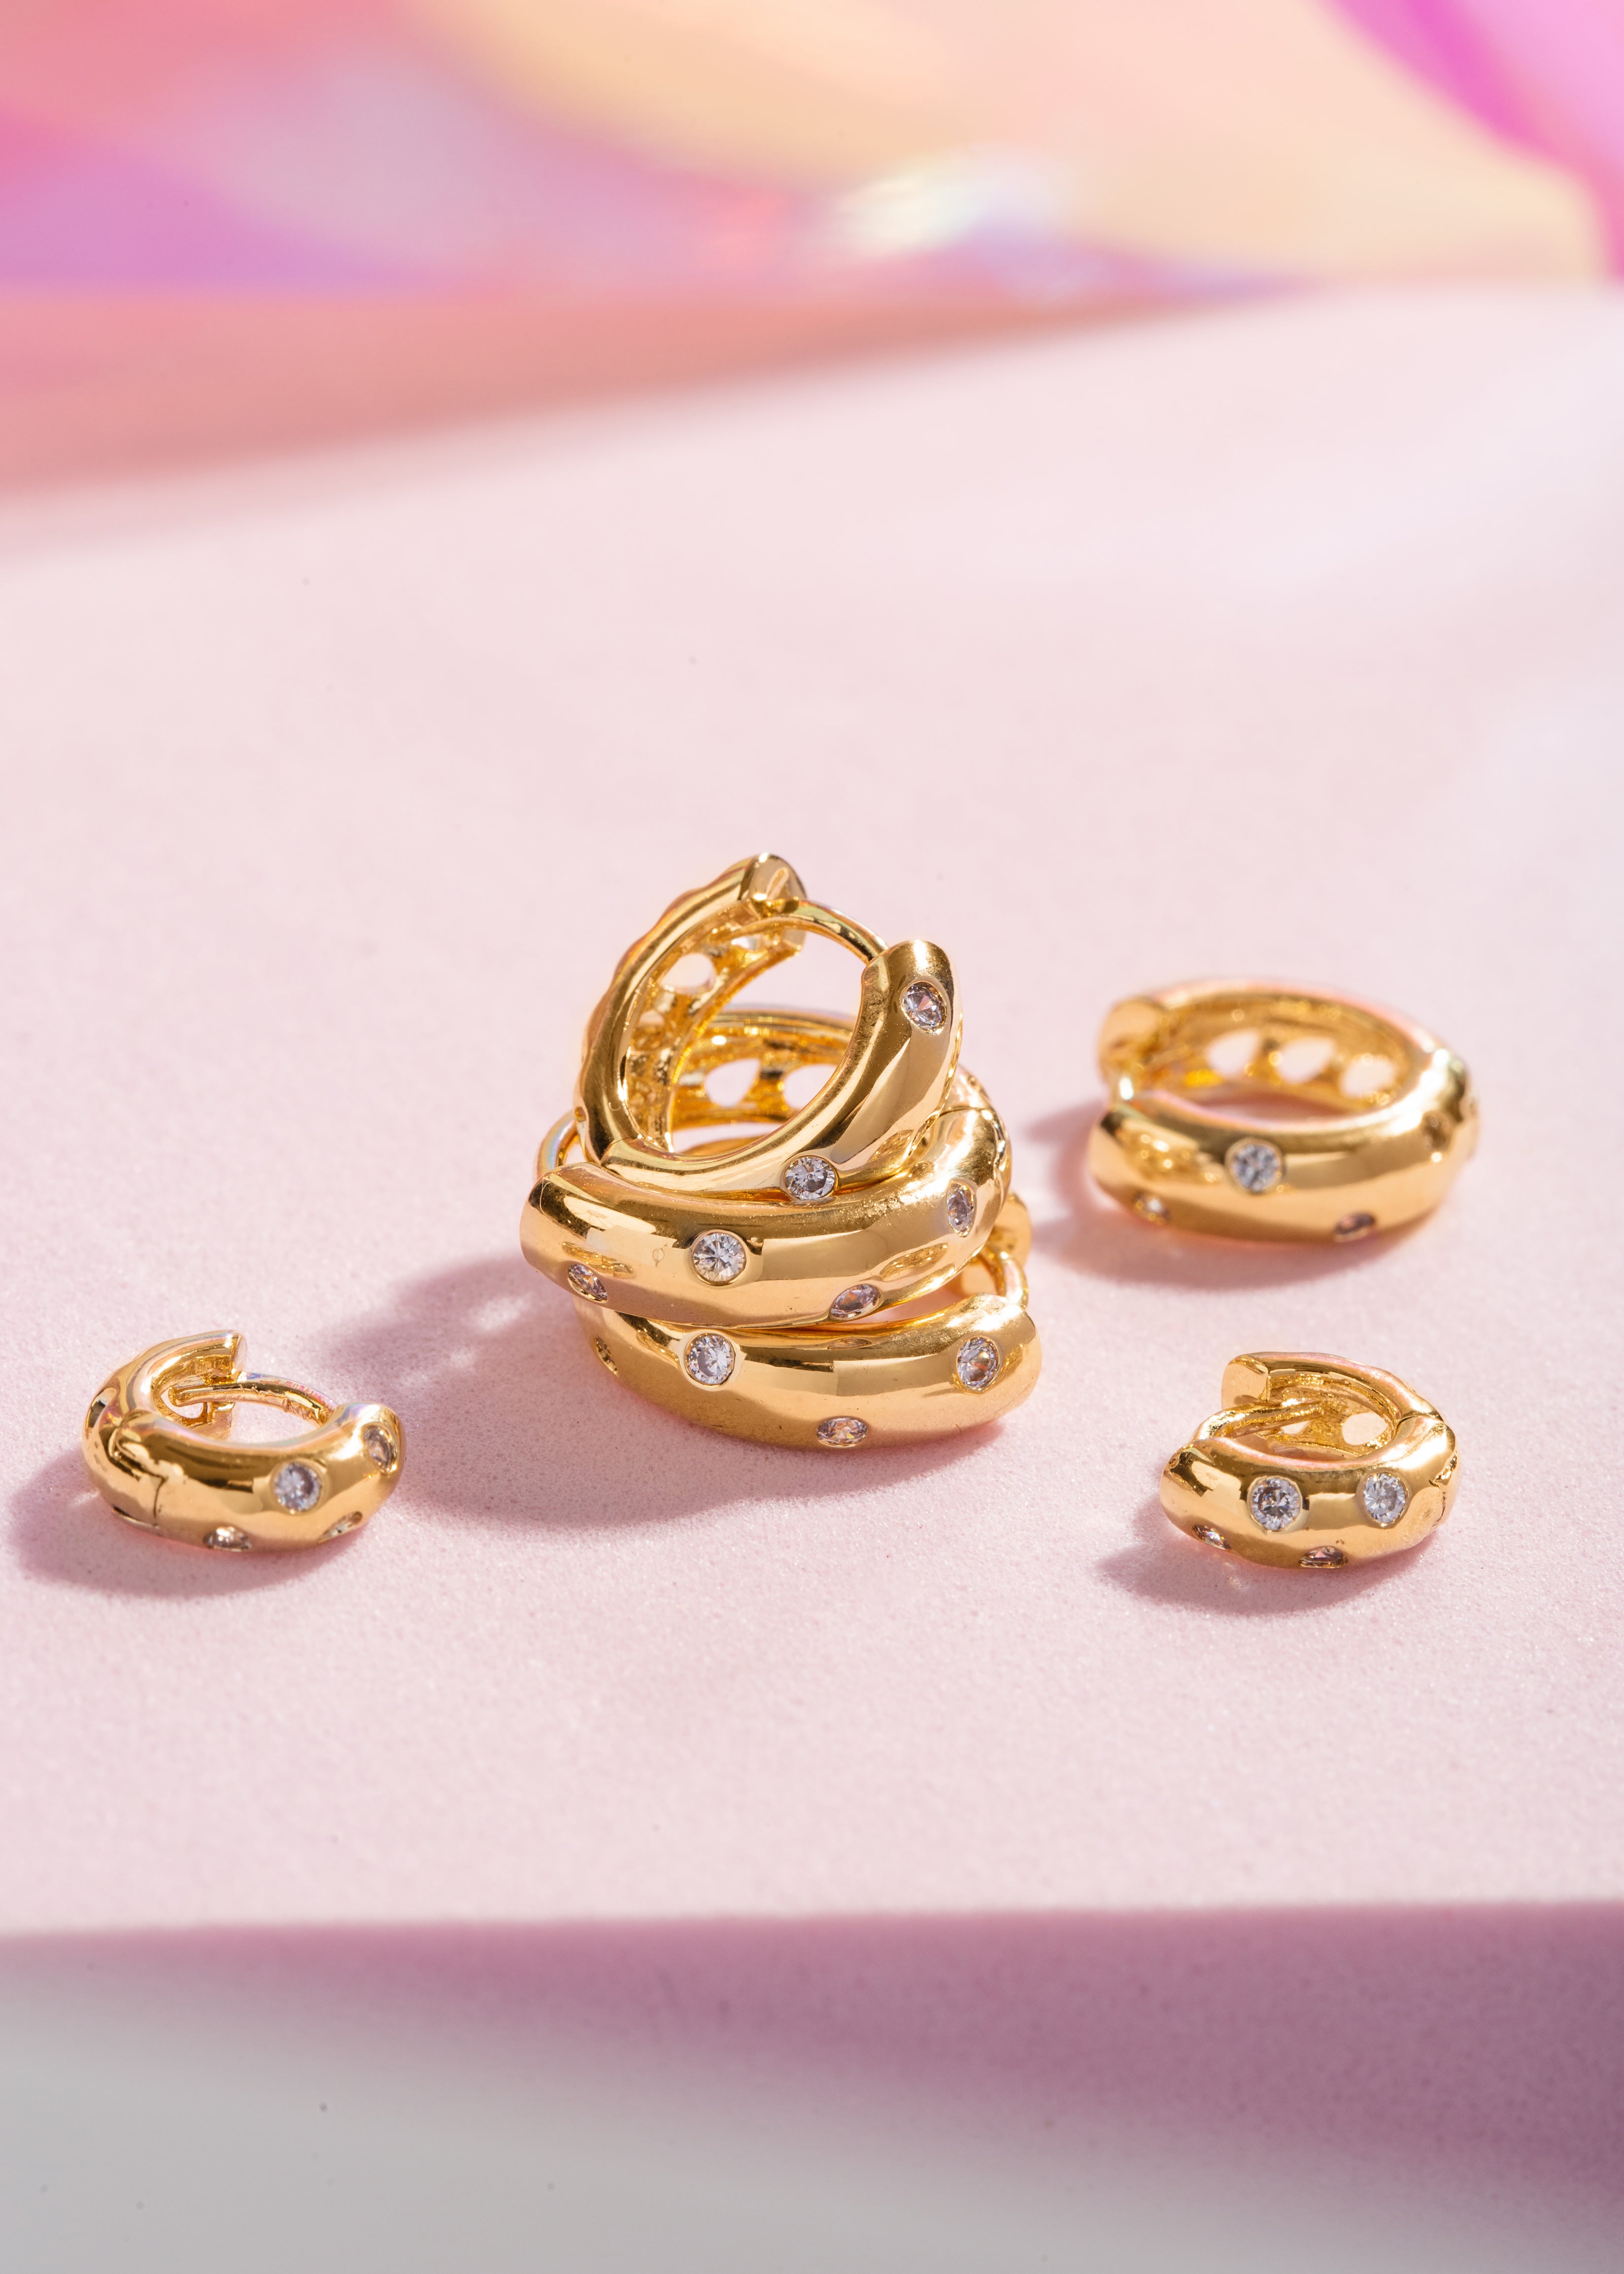 The Athena & Co. Legacy: Fine Jewelry, Exceptional Quality